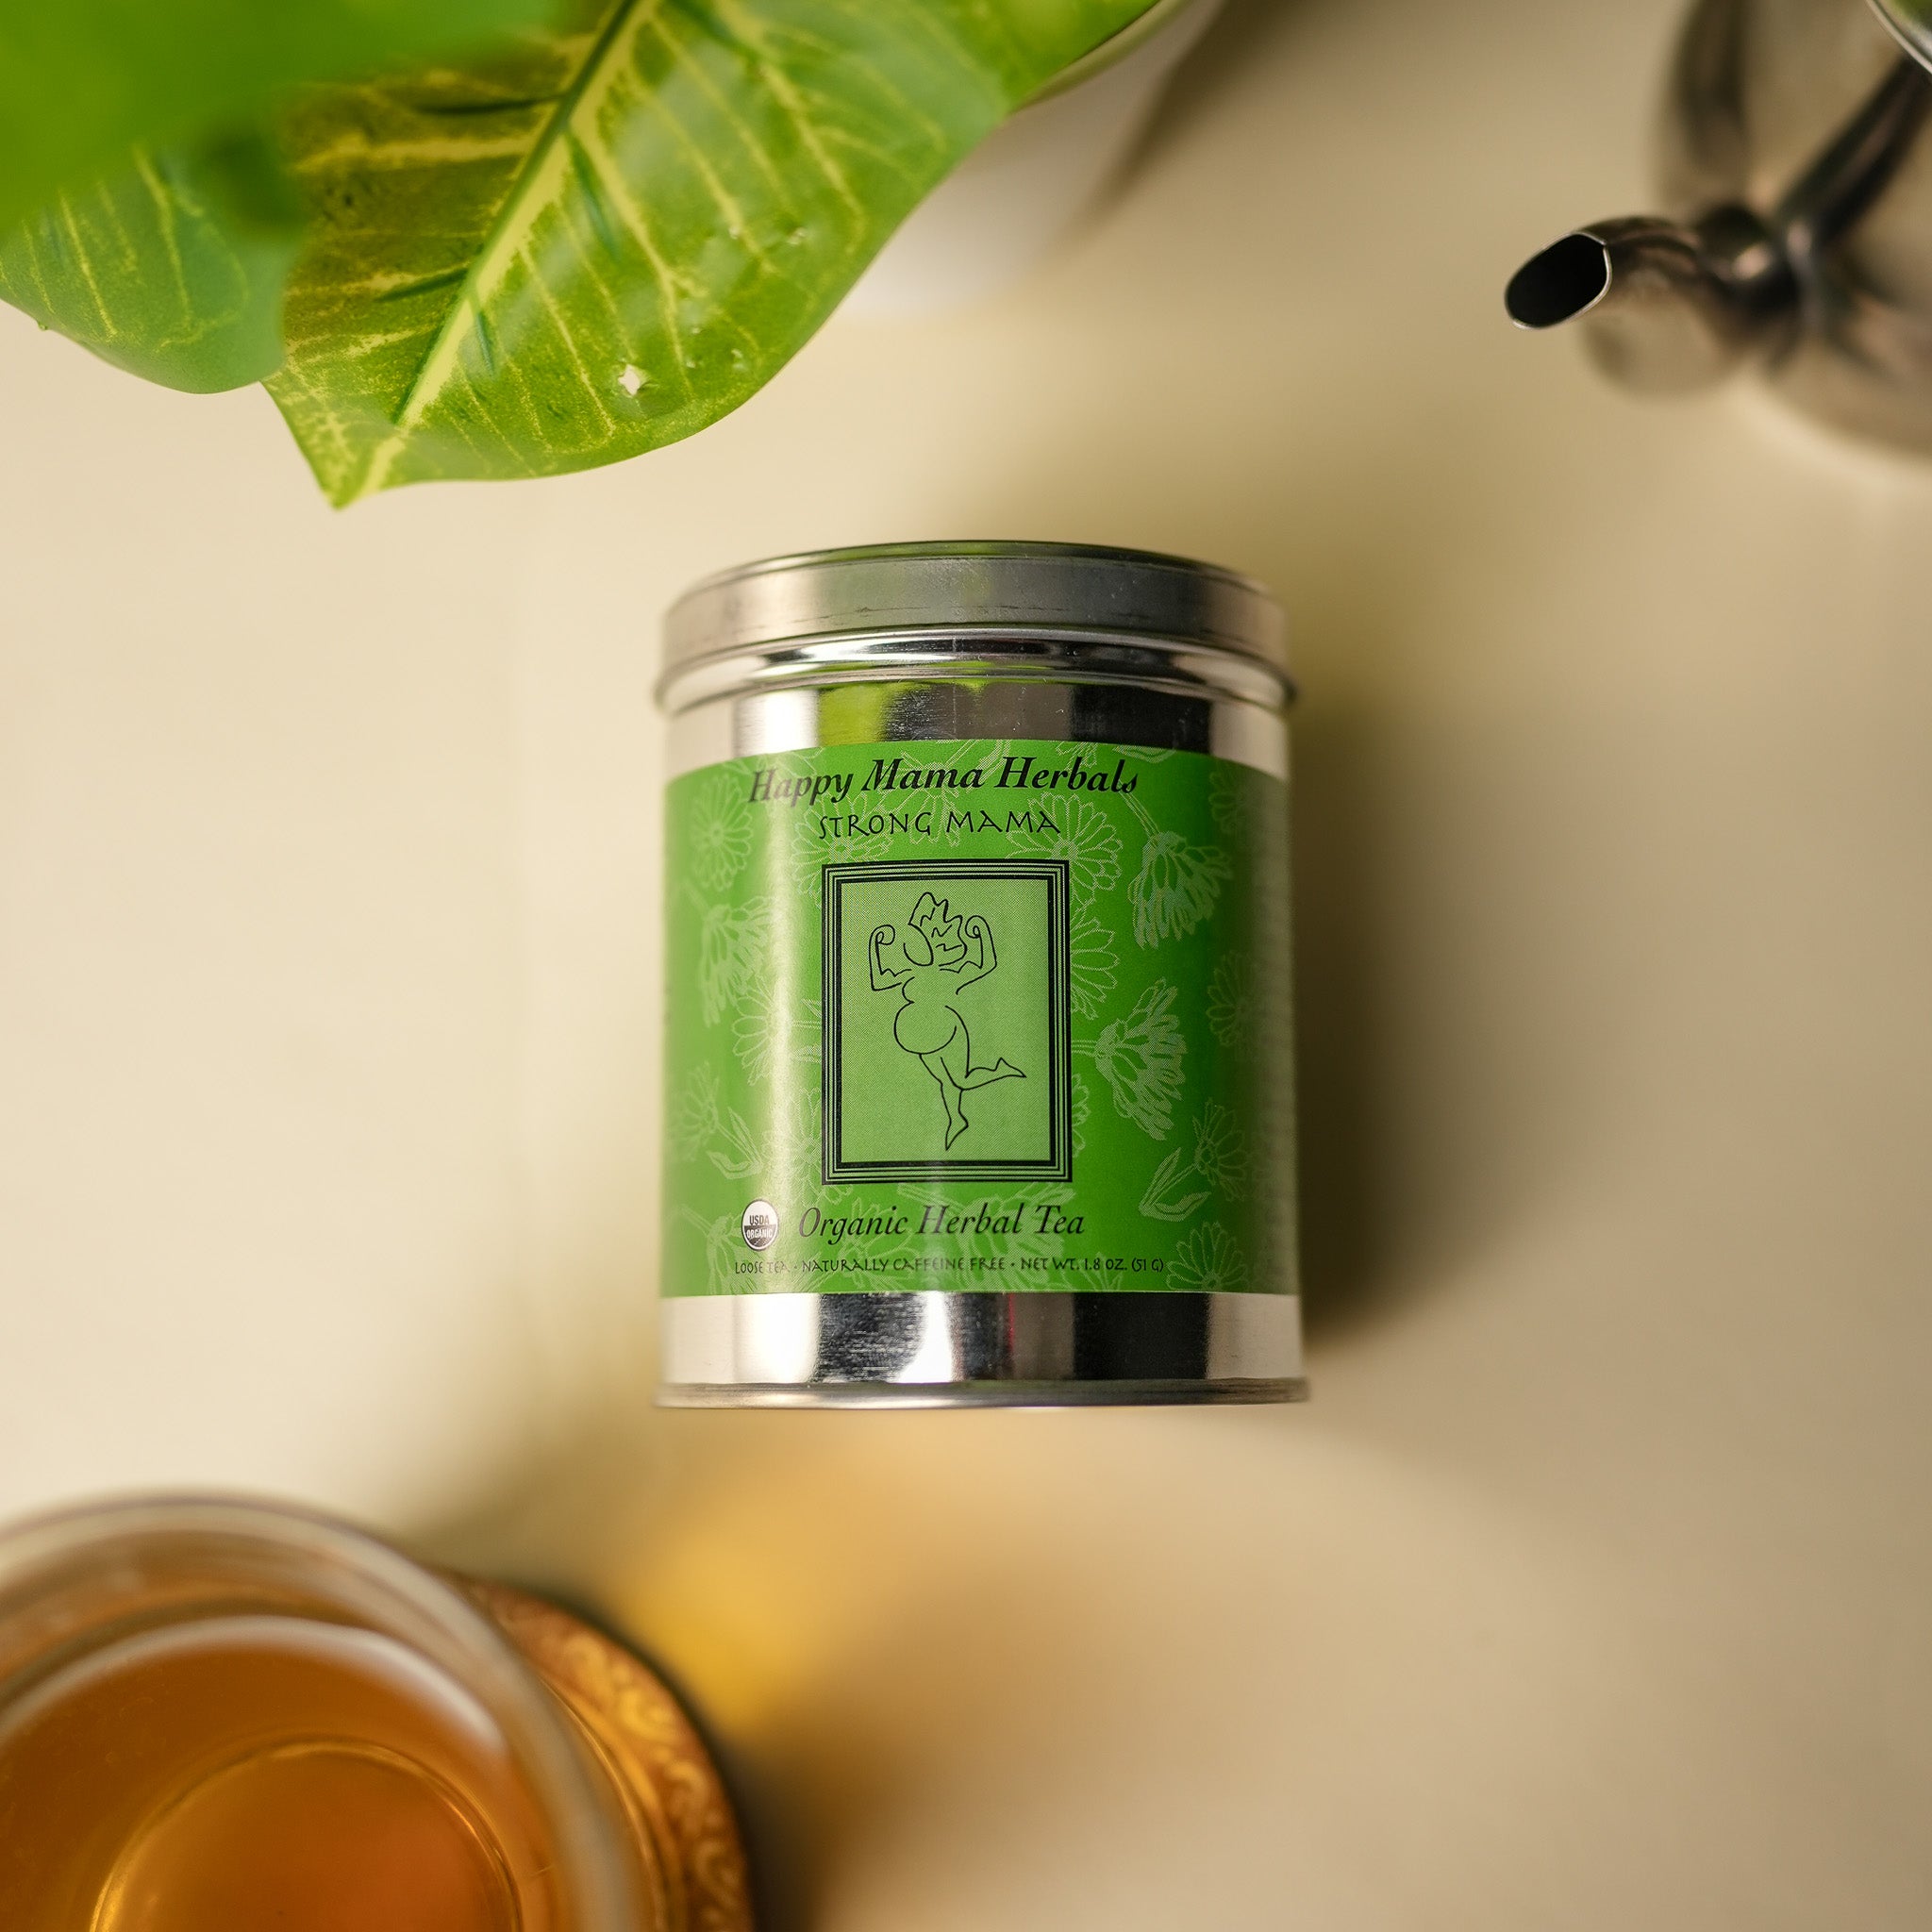 Strong Mama Organic Herbal Tea (Happy Mama Herbals)